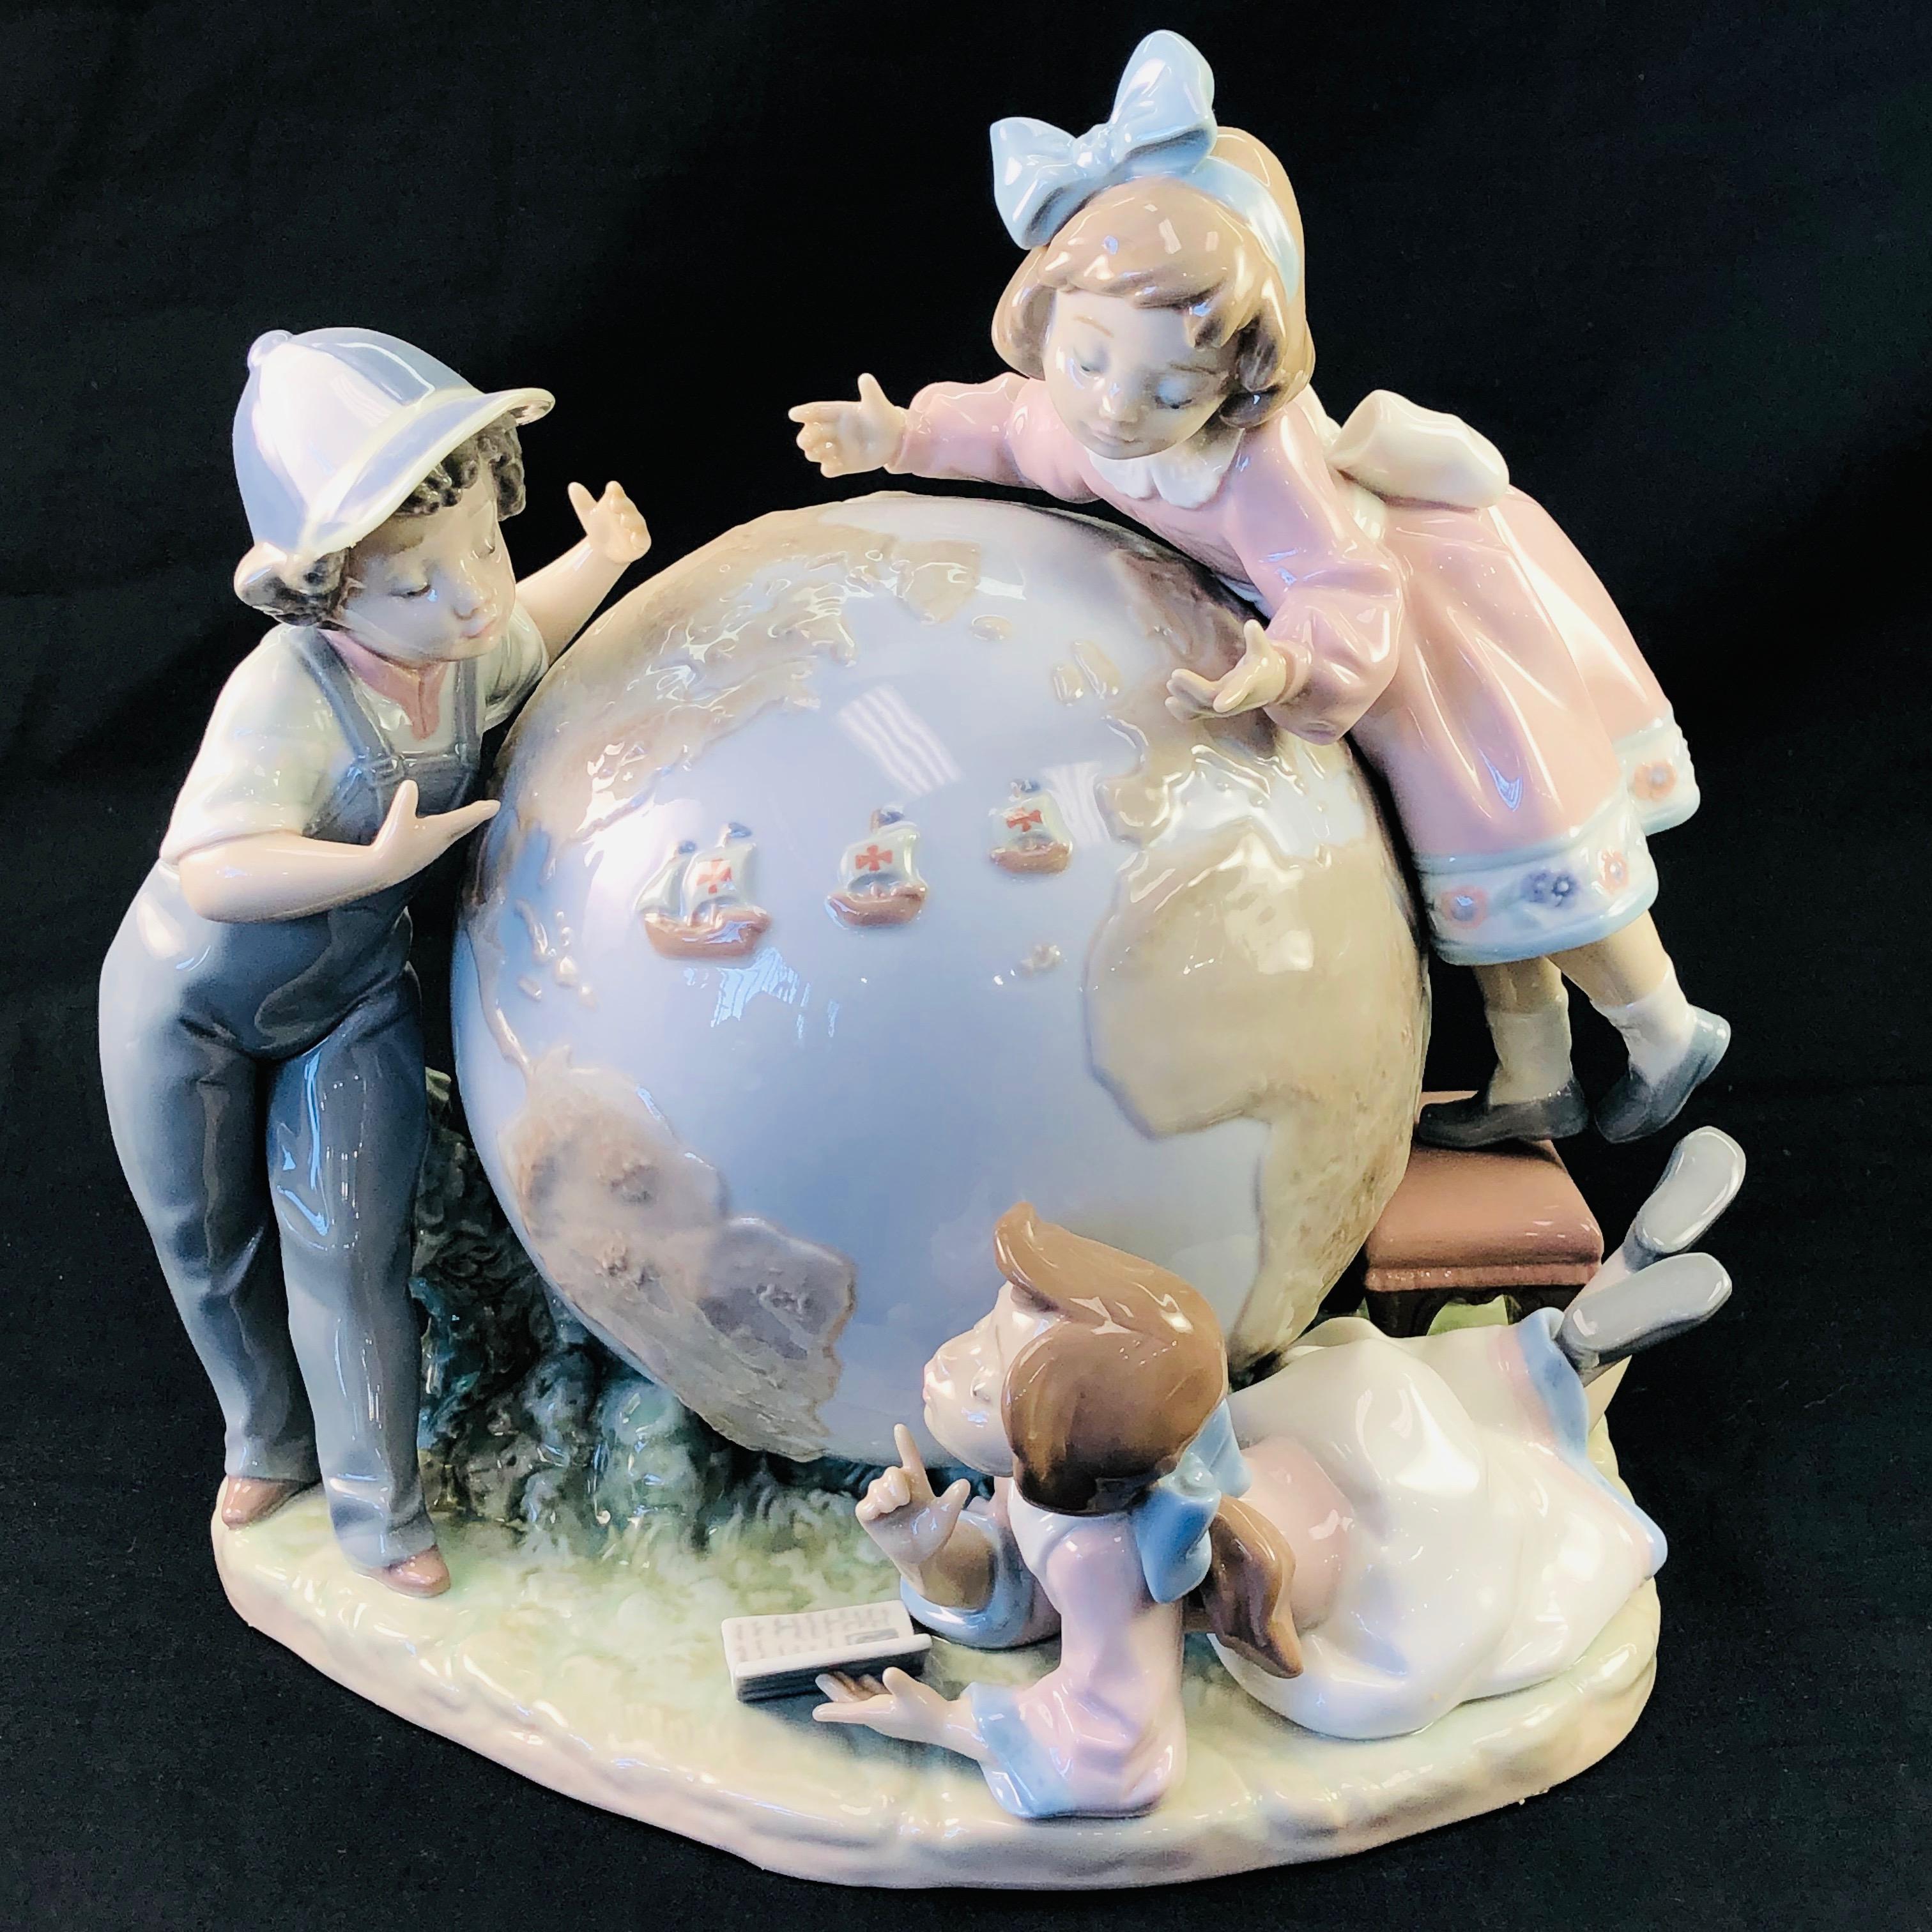 Estate Lladro #5847 "The Voyage of Columbus" porcelain figurine with original box